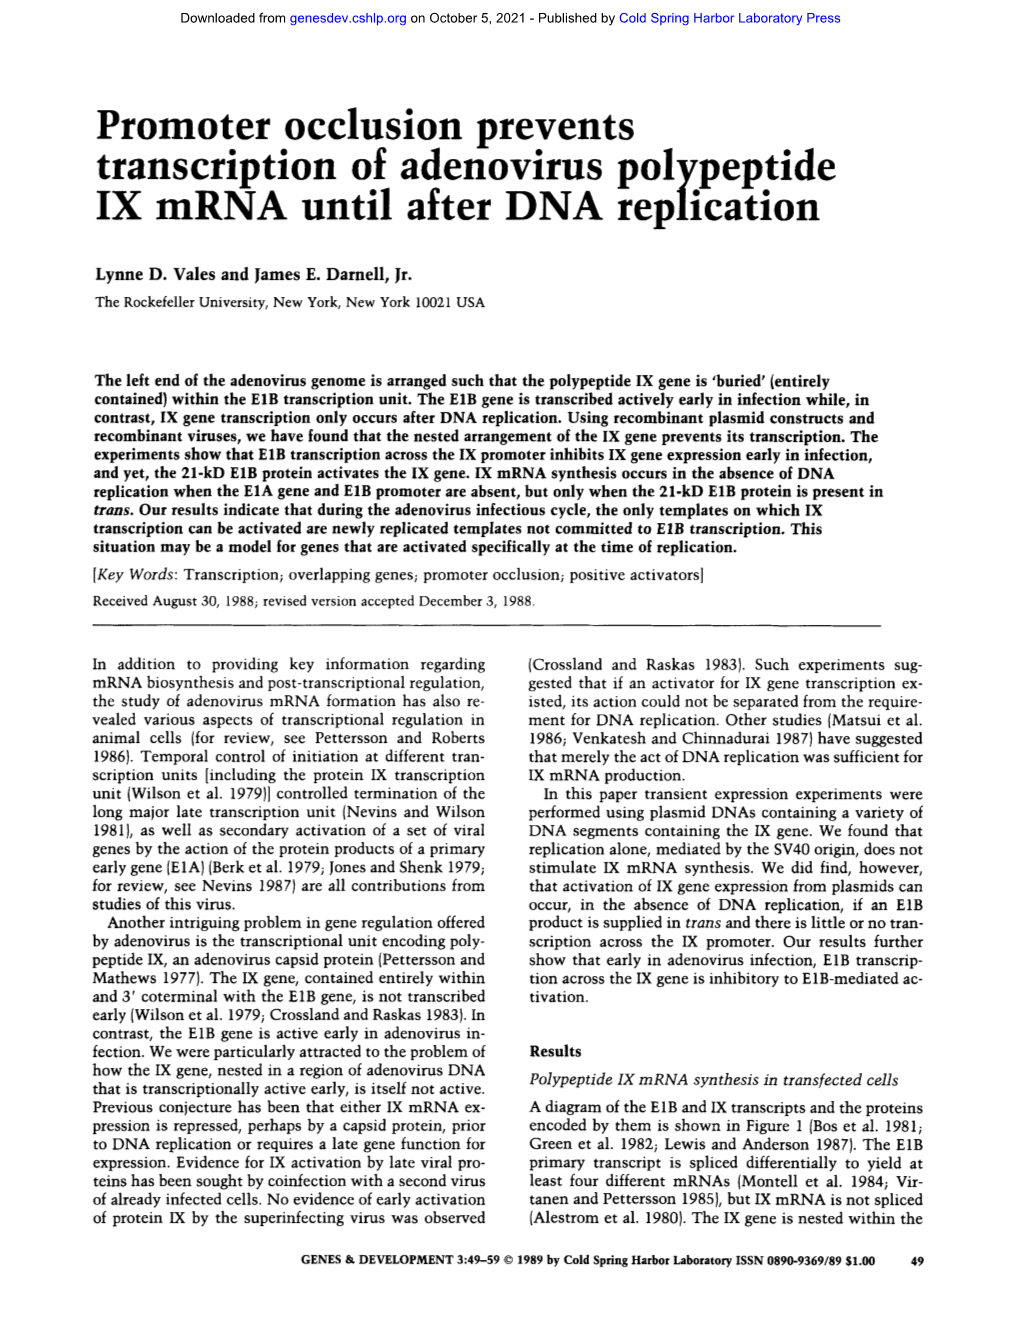 Promoter Occlusion Prevents Transcription of Adenovirus Poly.Peptide IX Mrna Until After DNA Replication